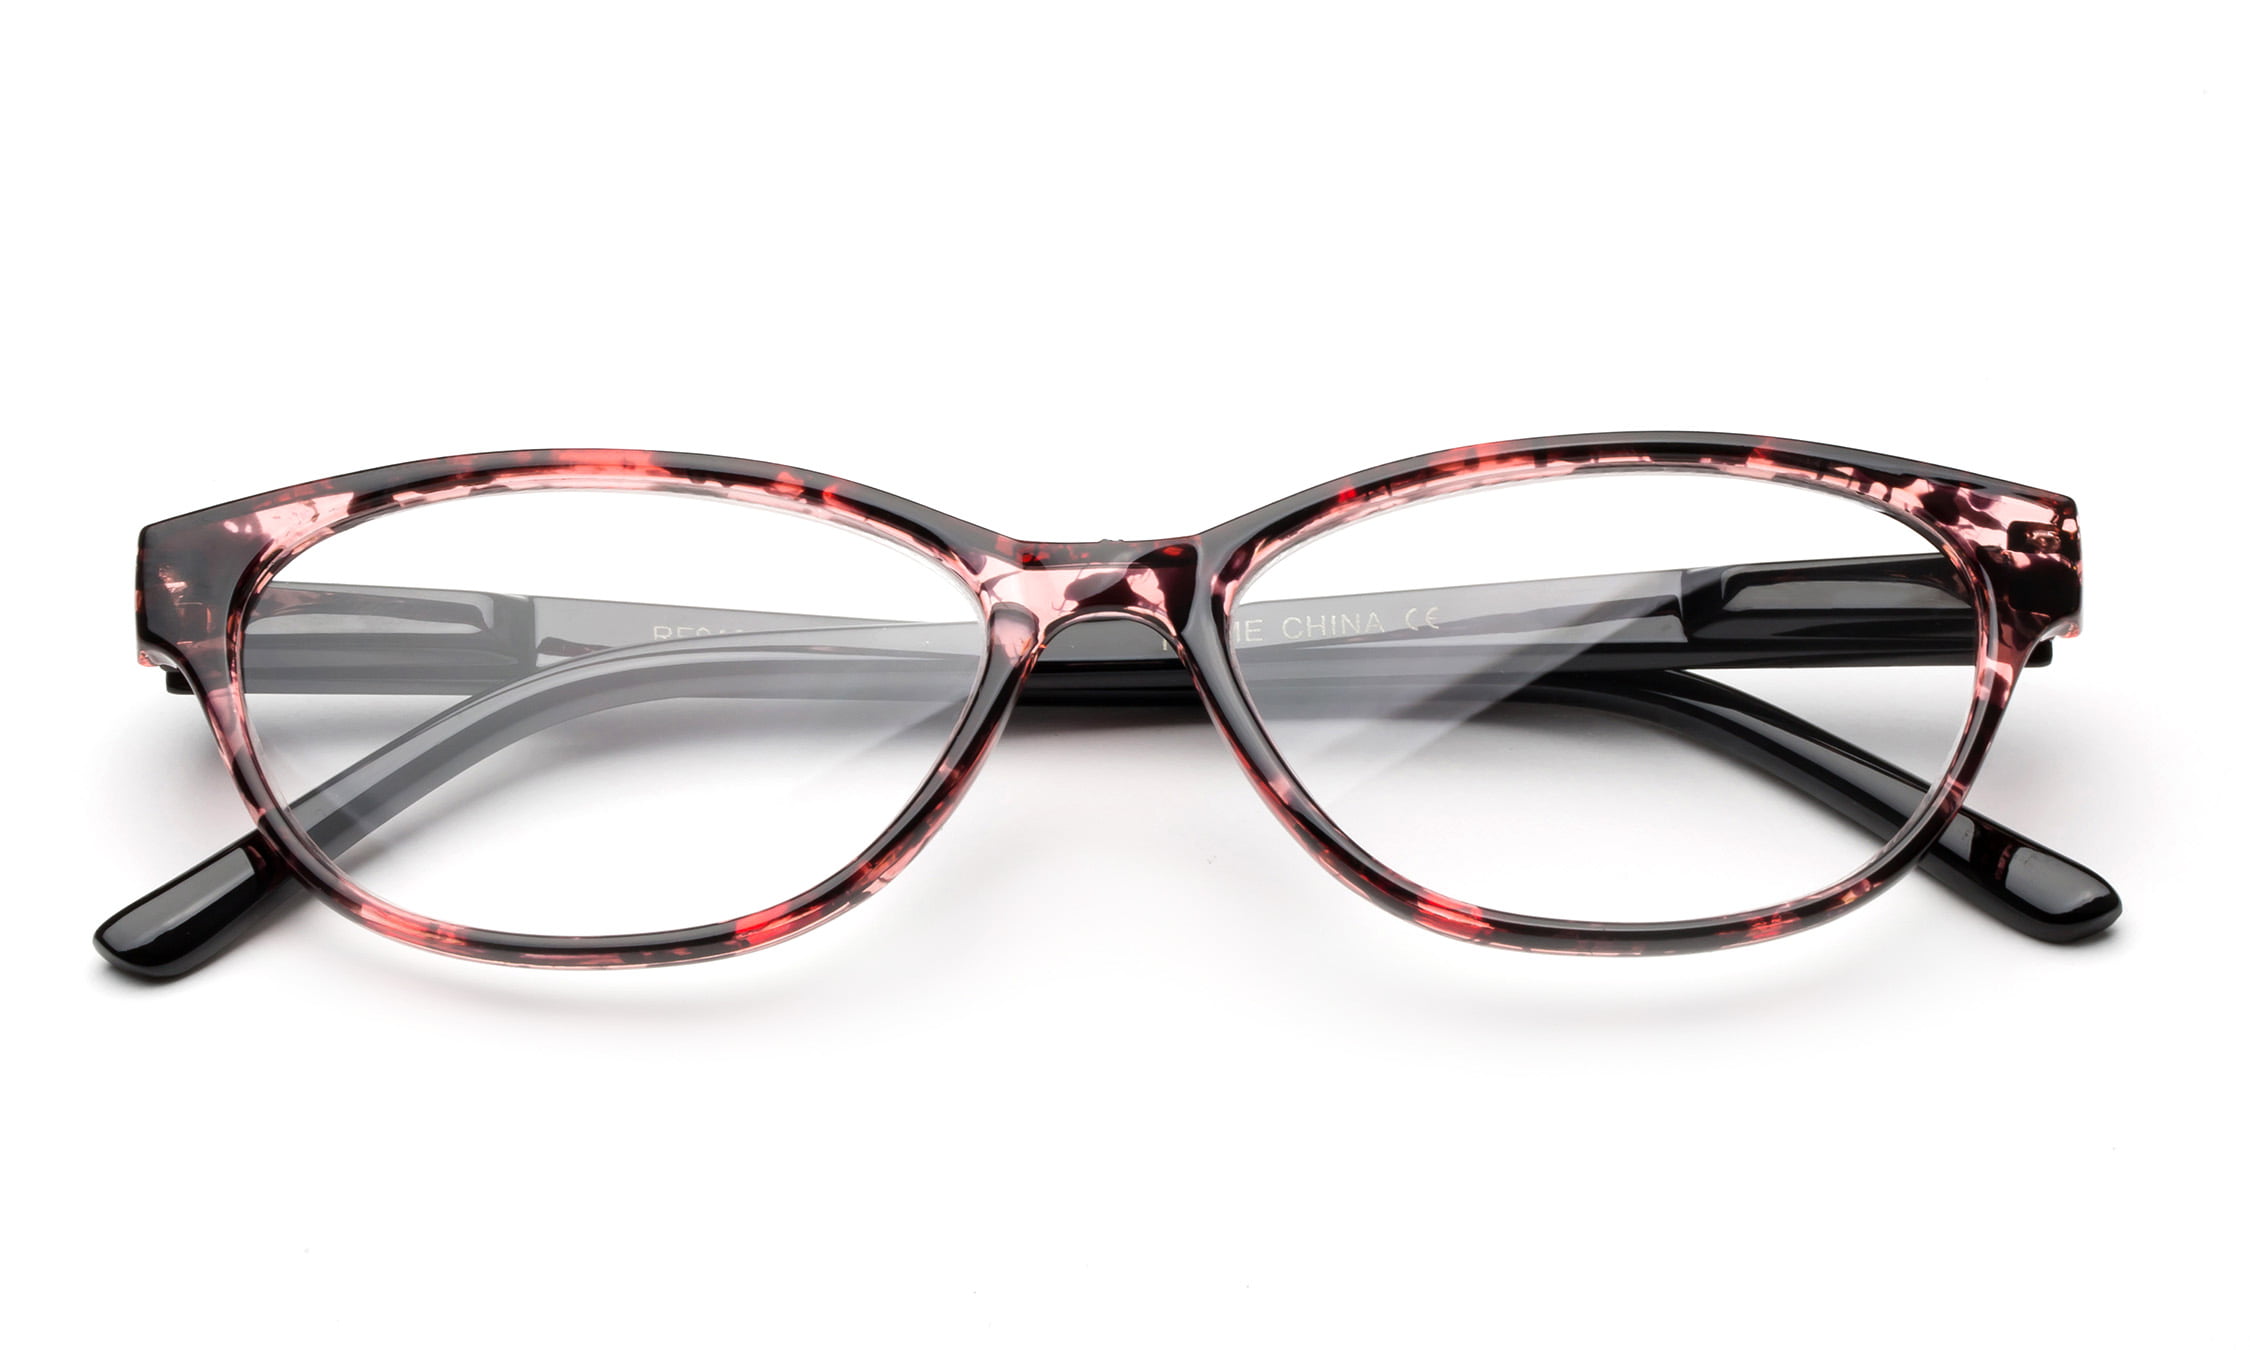 Newbee Fashion Cateye Clear Lens Glasses for Women Cat Eyes Frame